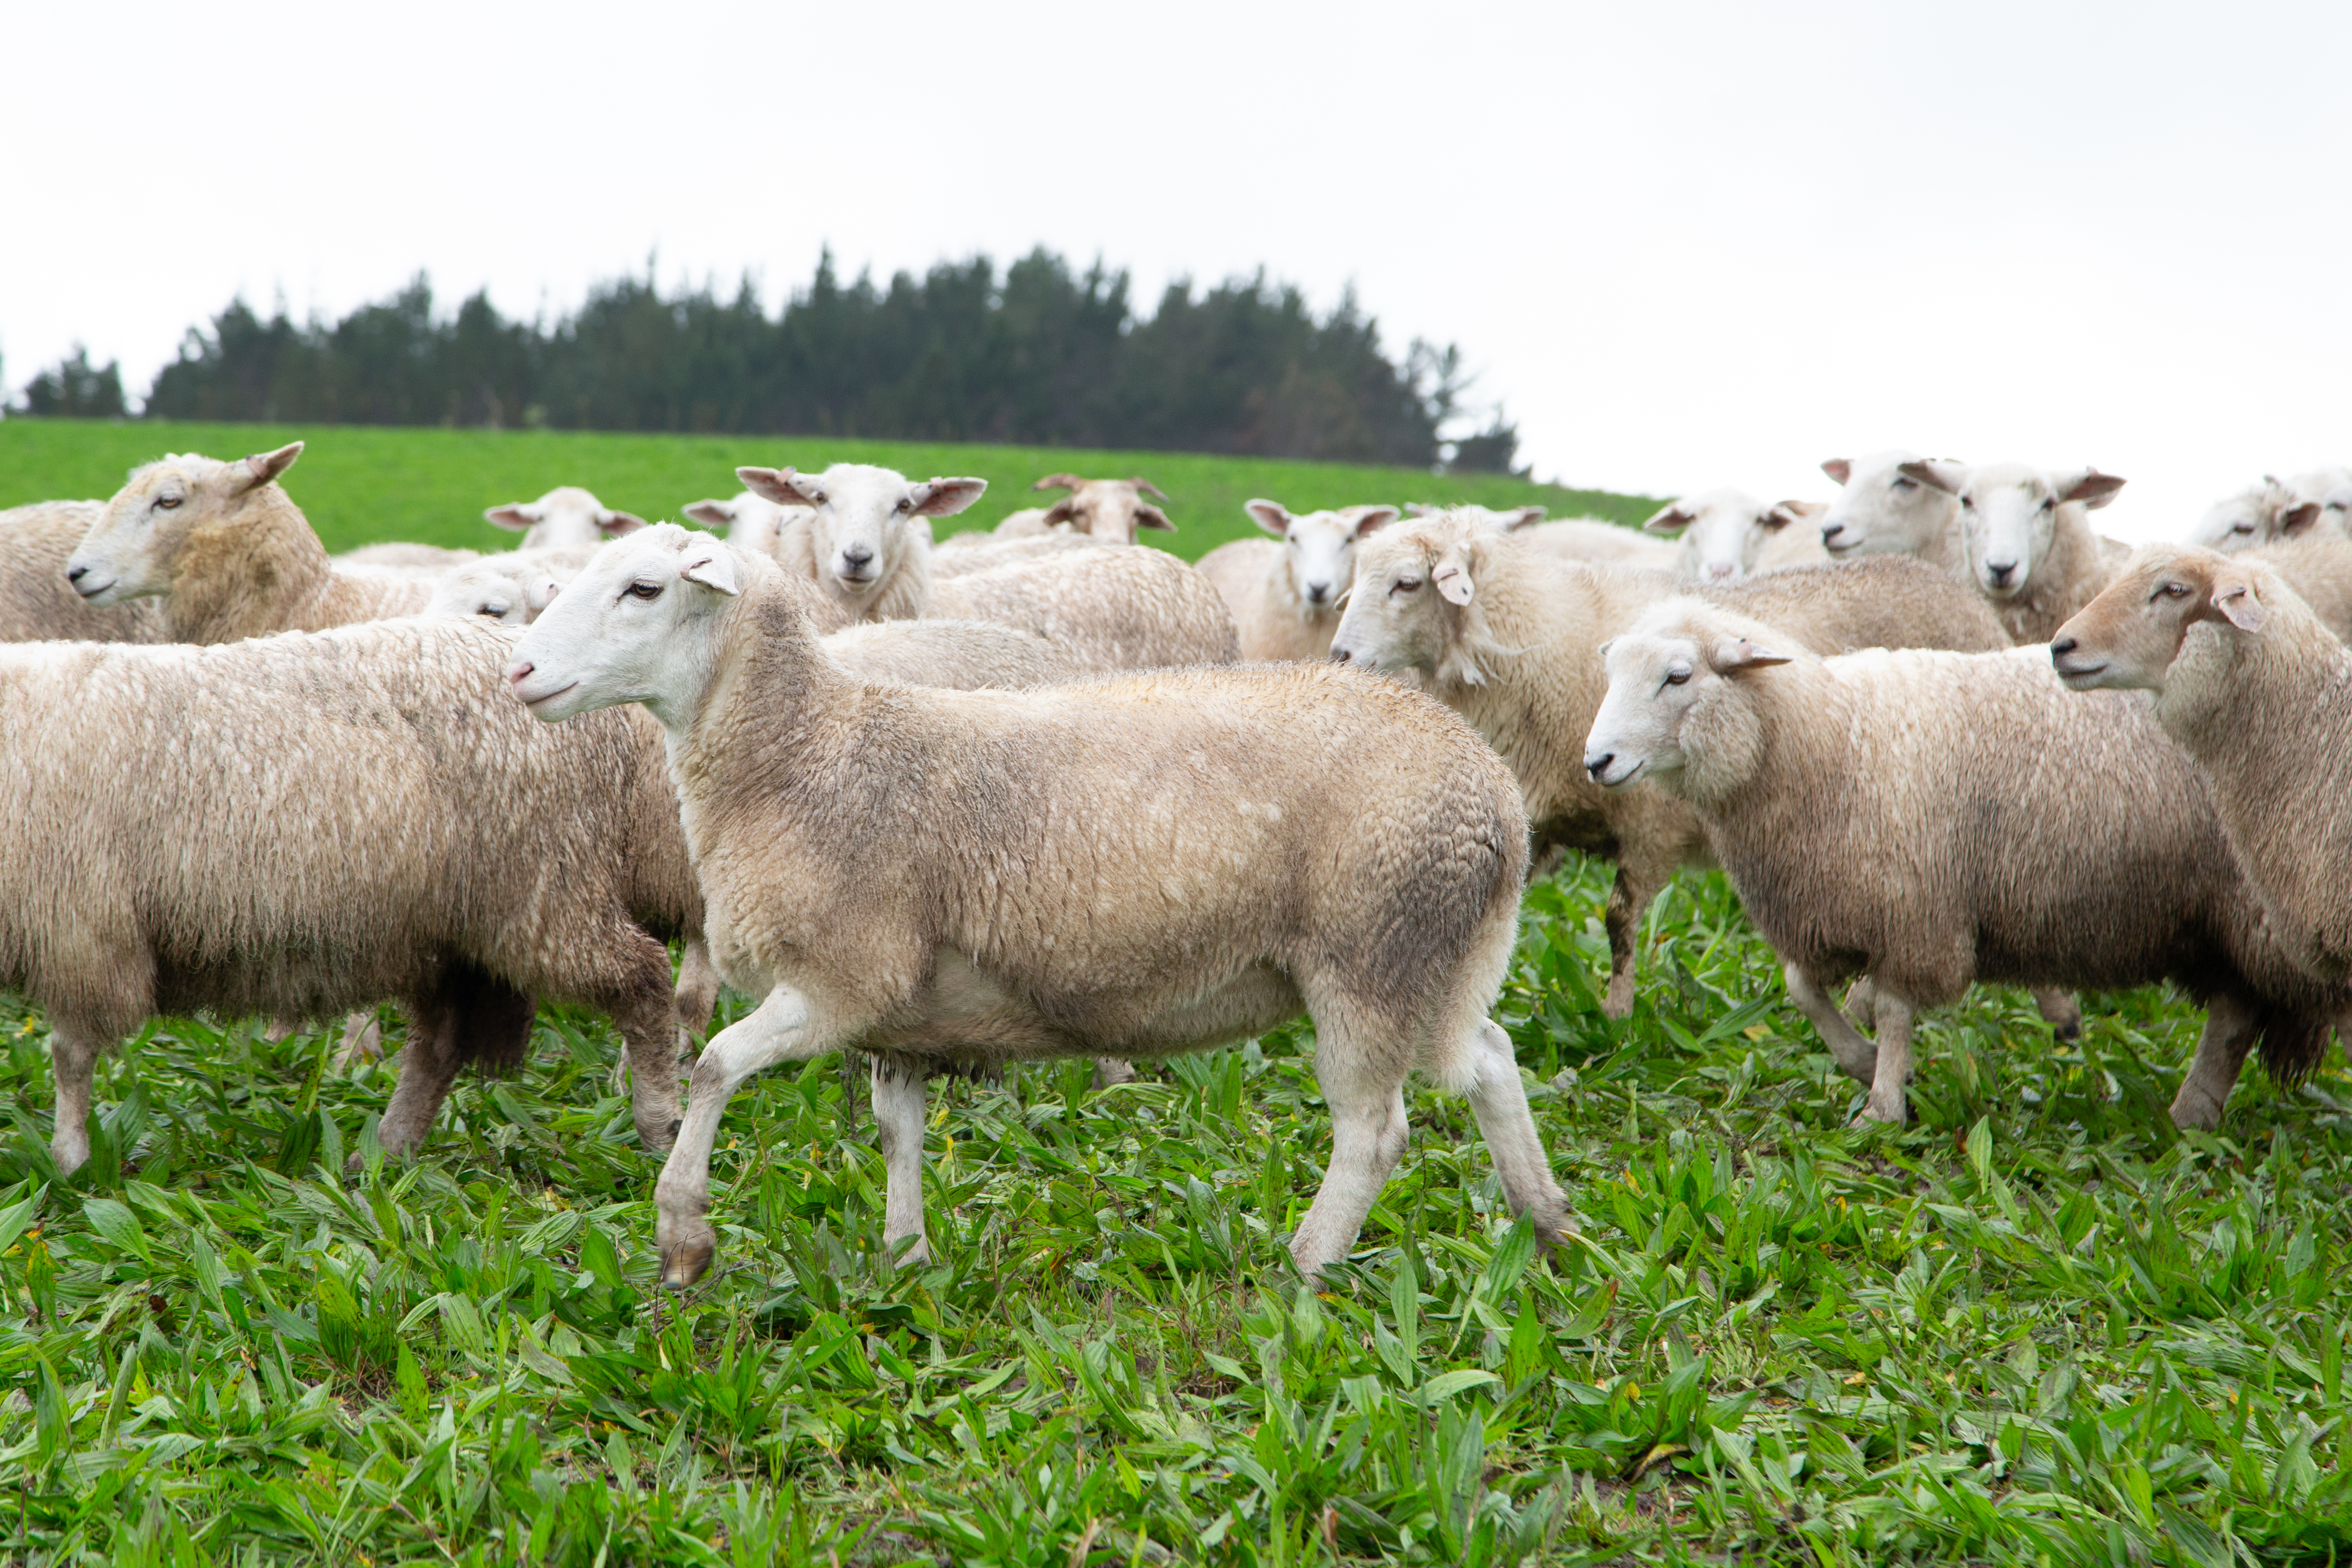 ‘Sheep of the Future’ transformational for NZ sheep farming